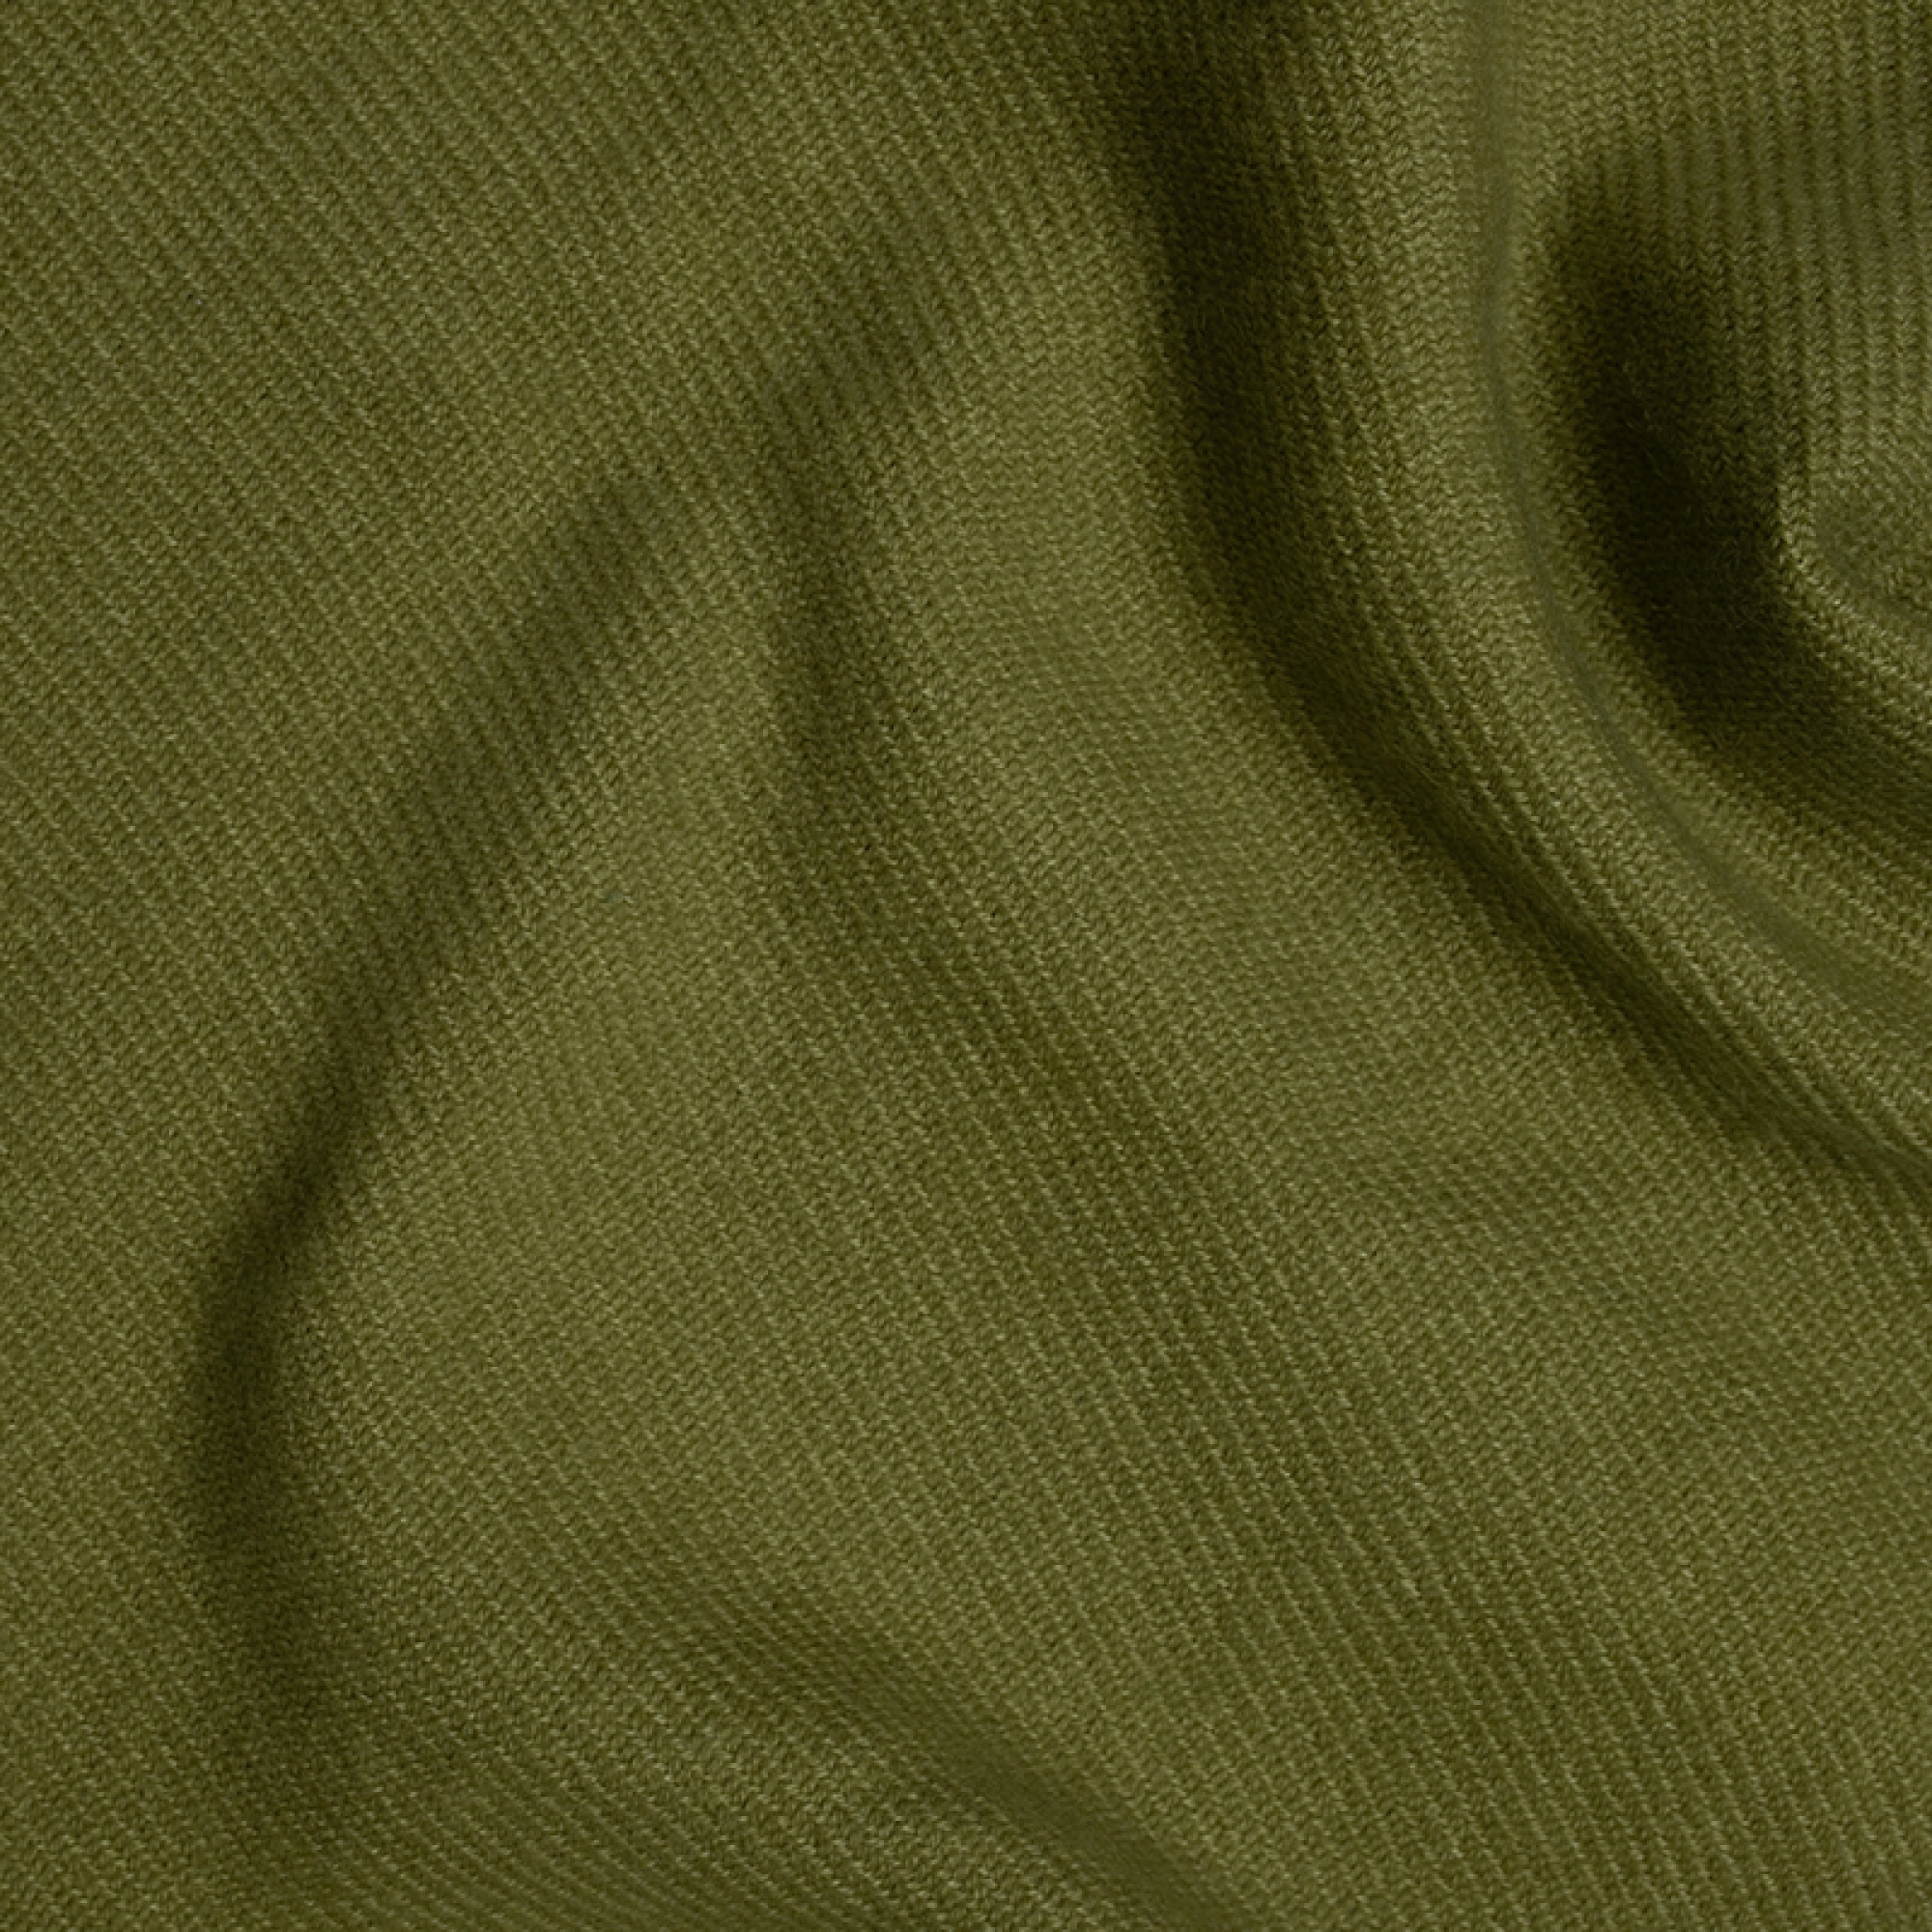 Cashmere accessori cocooning frisbi 147 x 203 verde giungla 147 x 203 cm